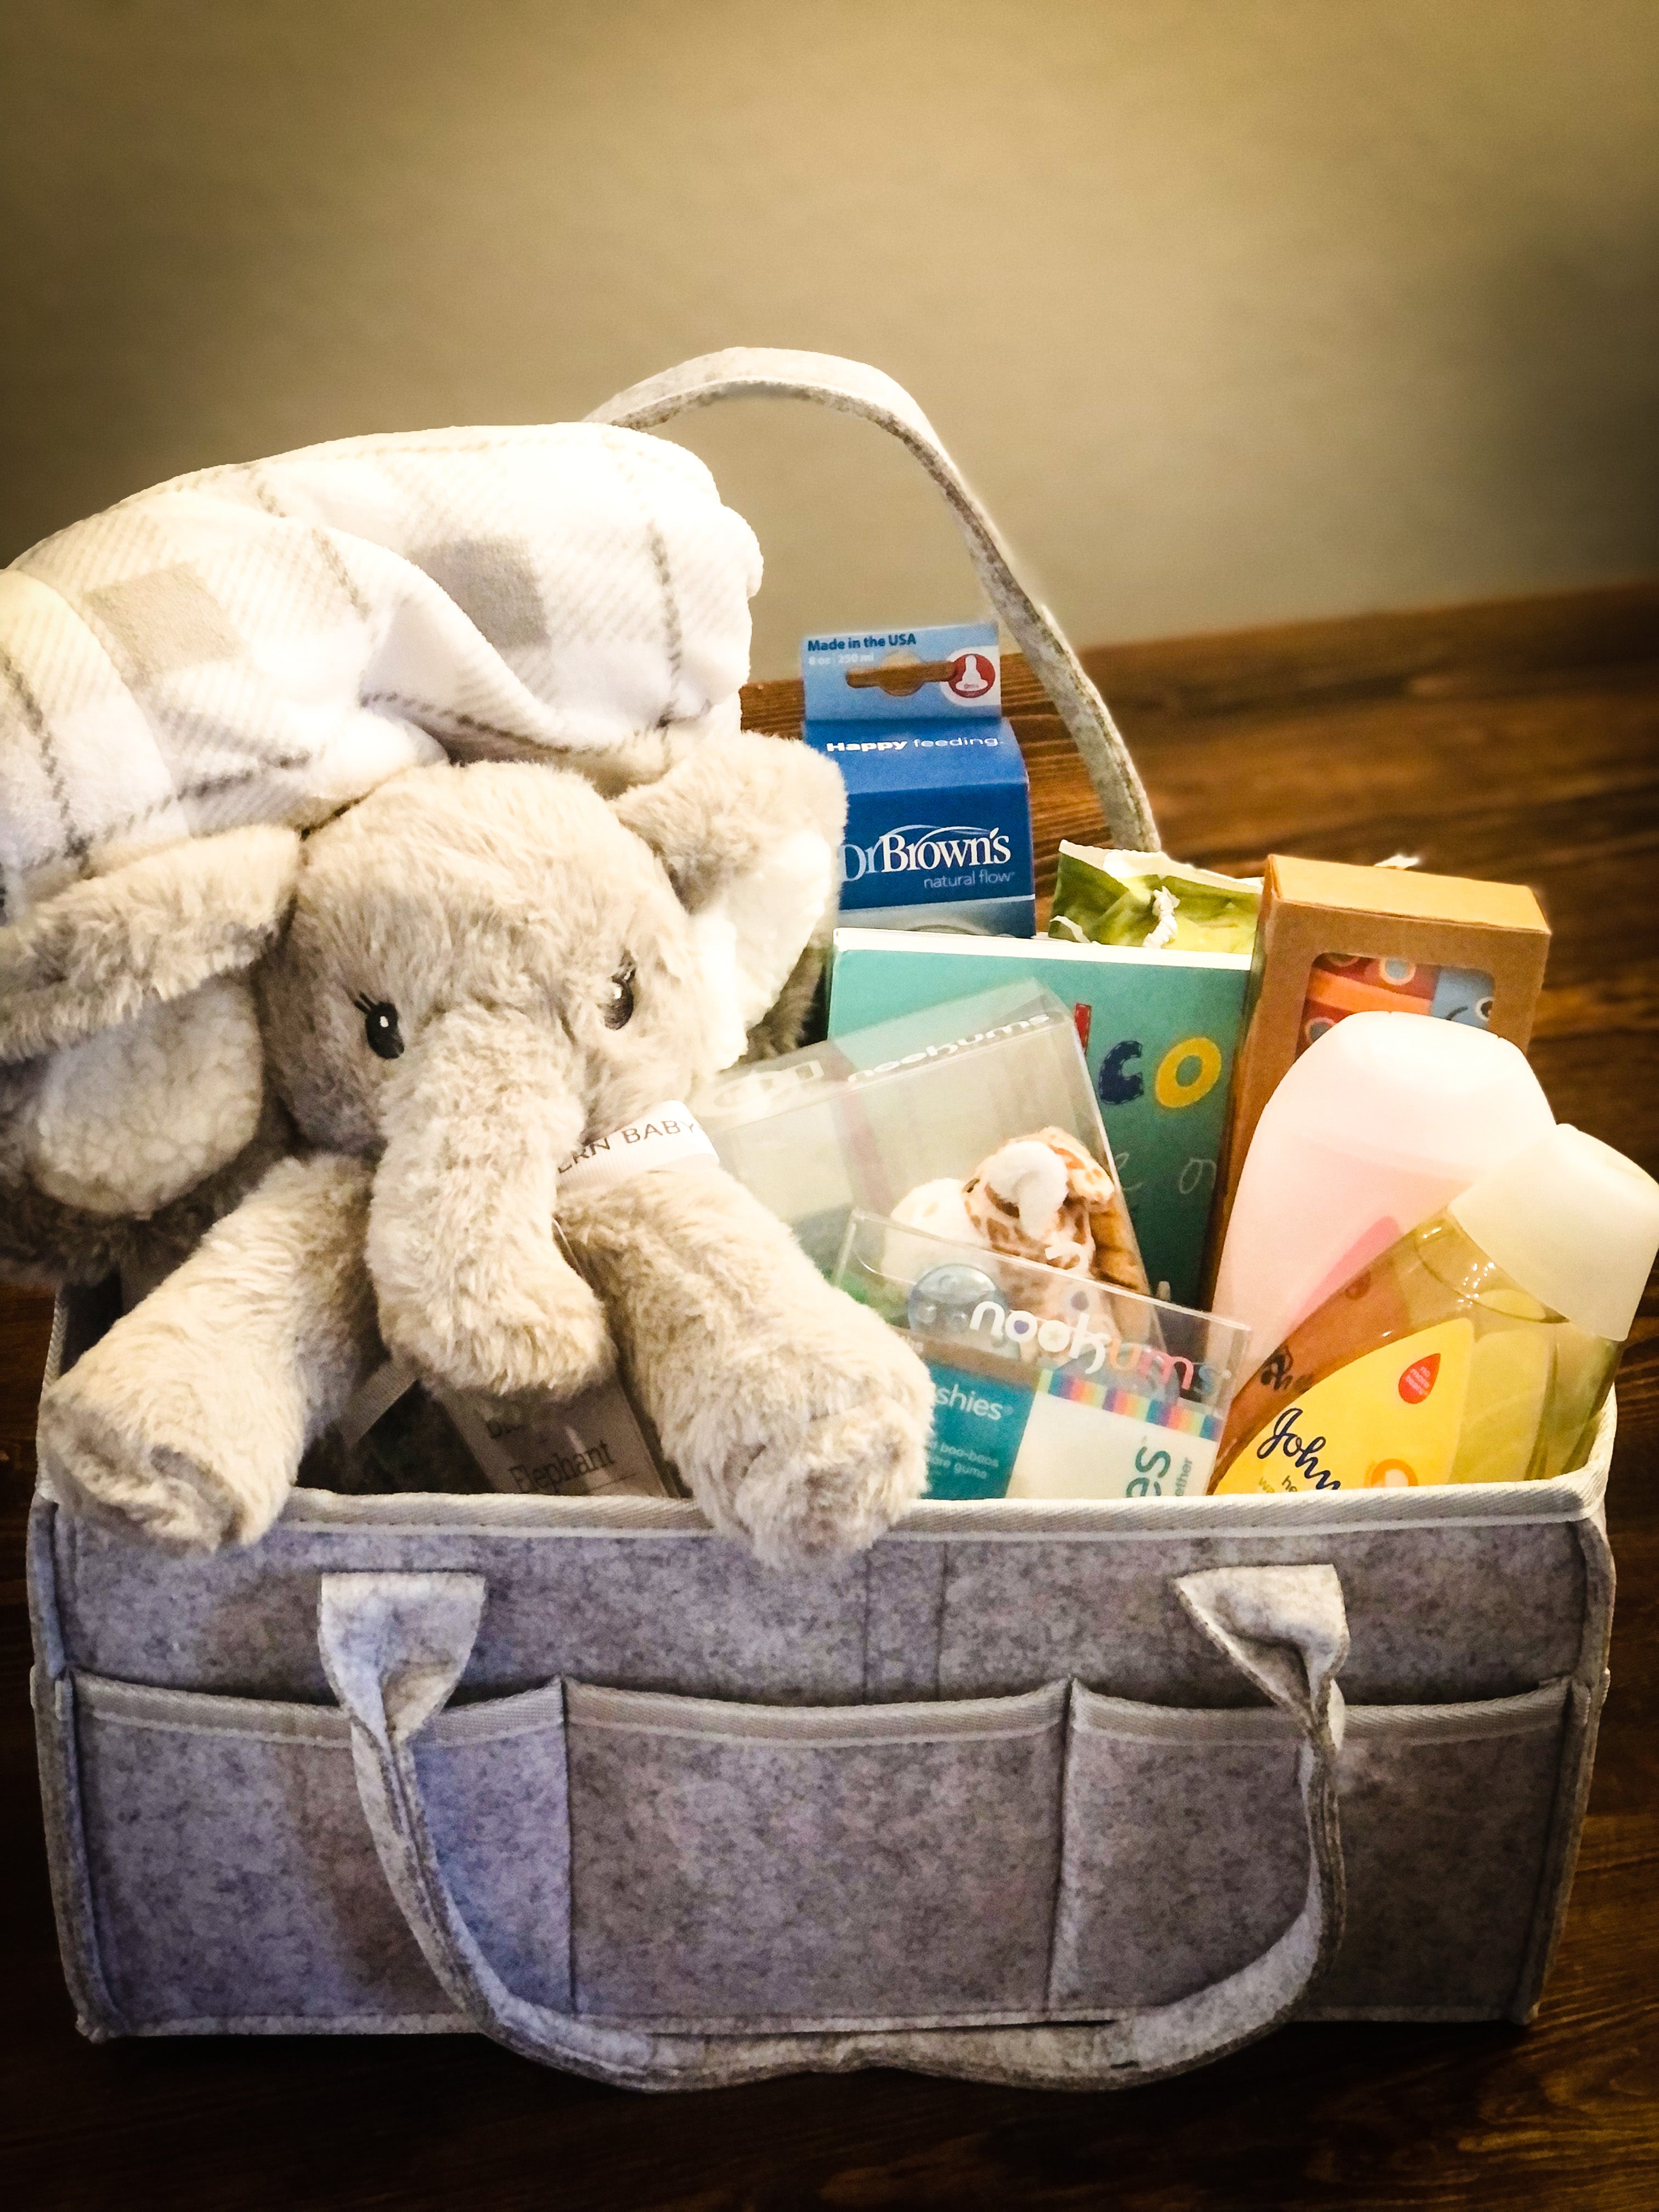 Pampered Boy Blue Gift Basket - Send Baby Gifts Online | Gift Baskets USA  to United States - Flora2000